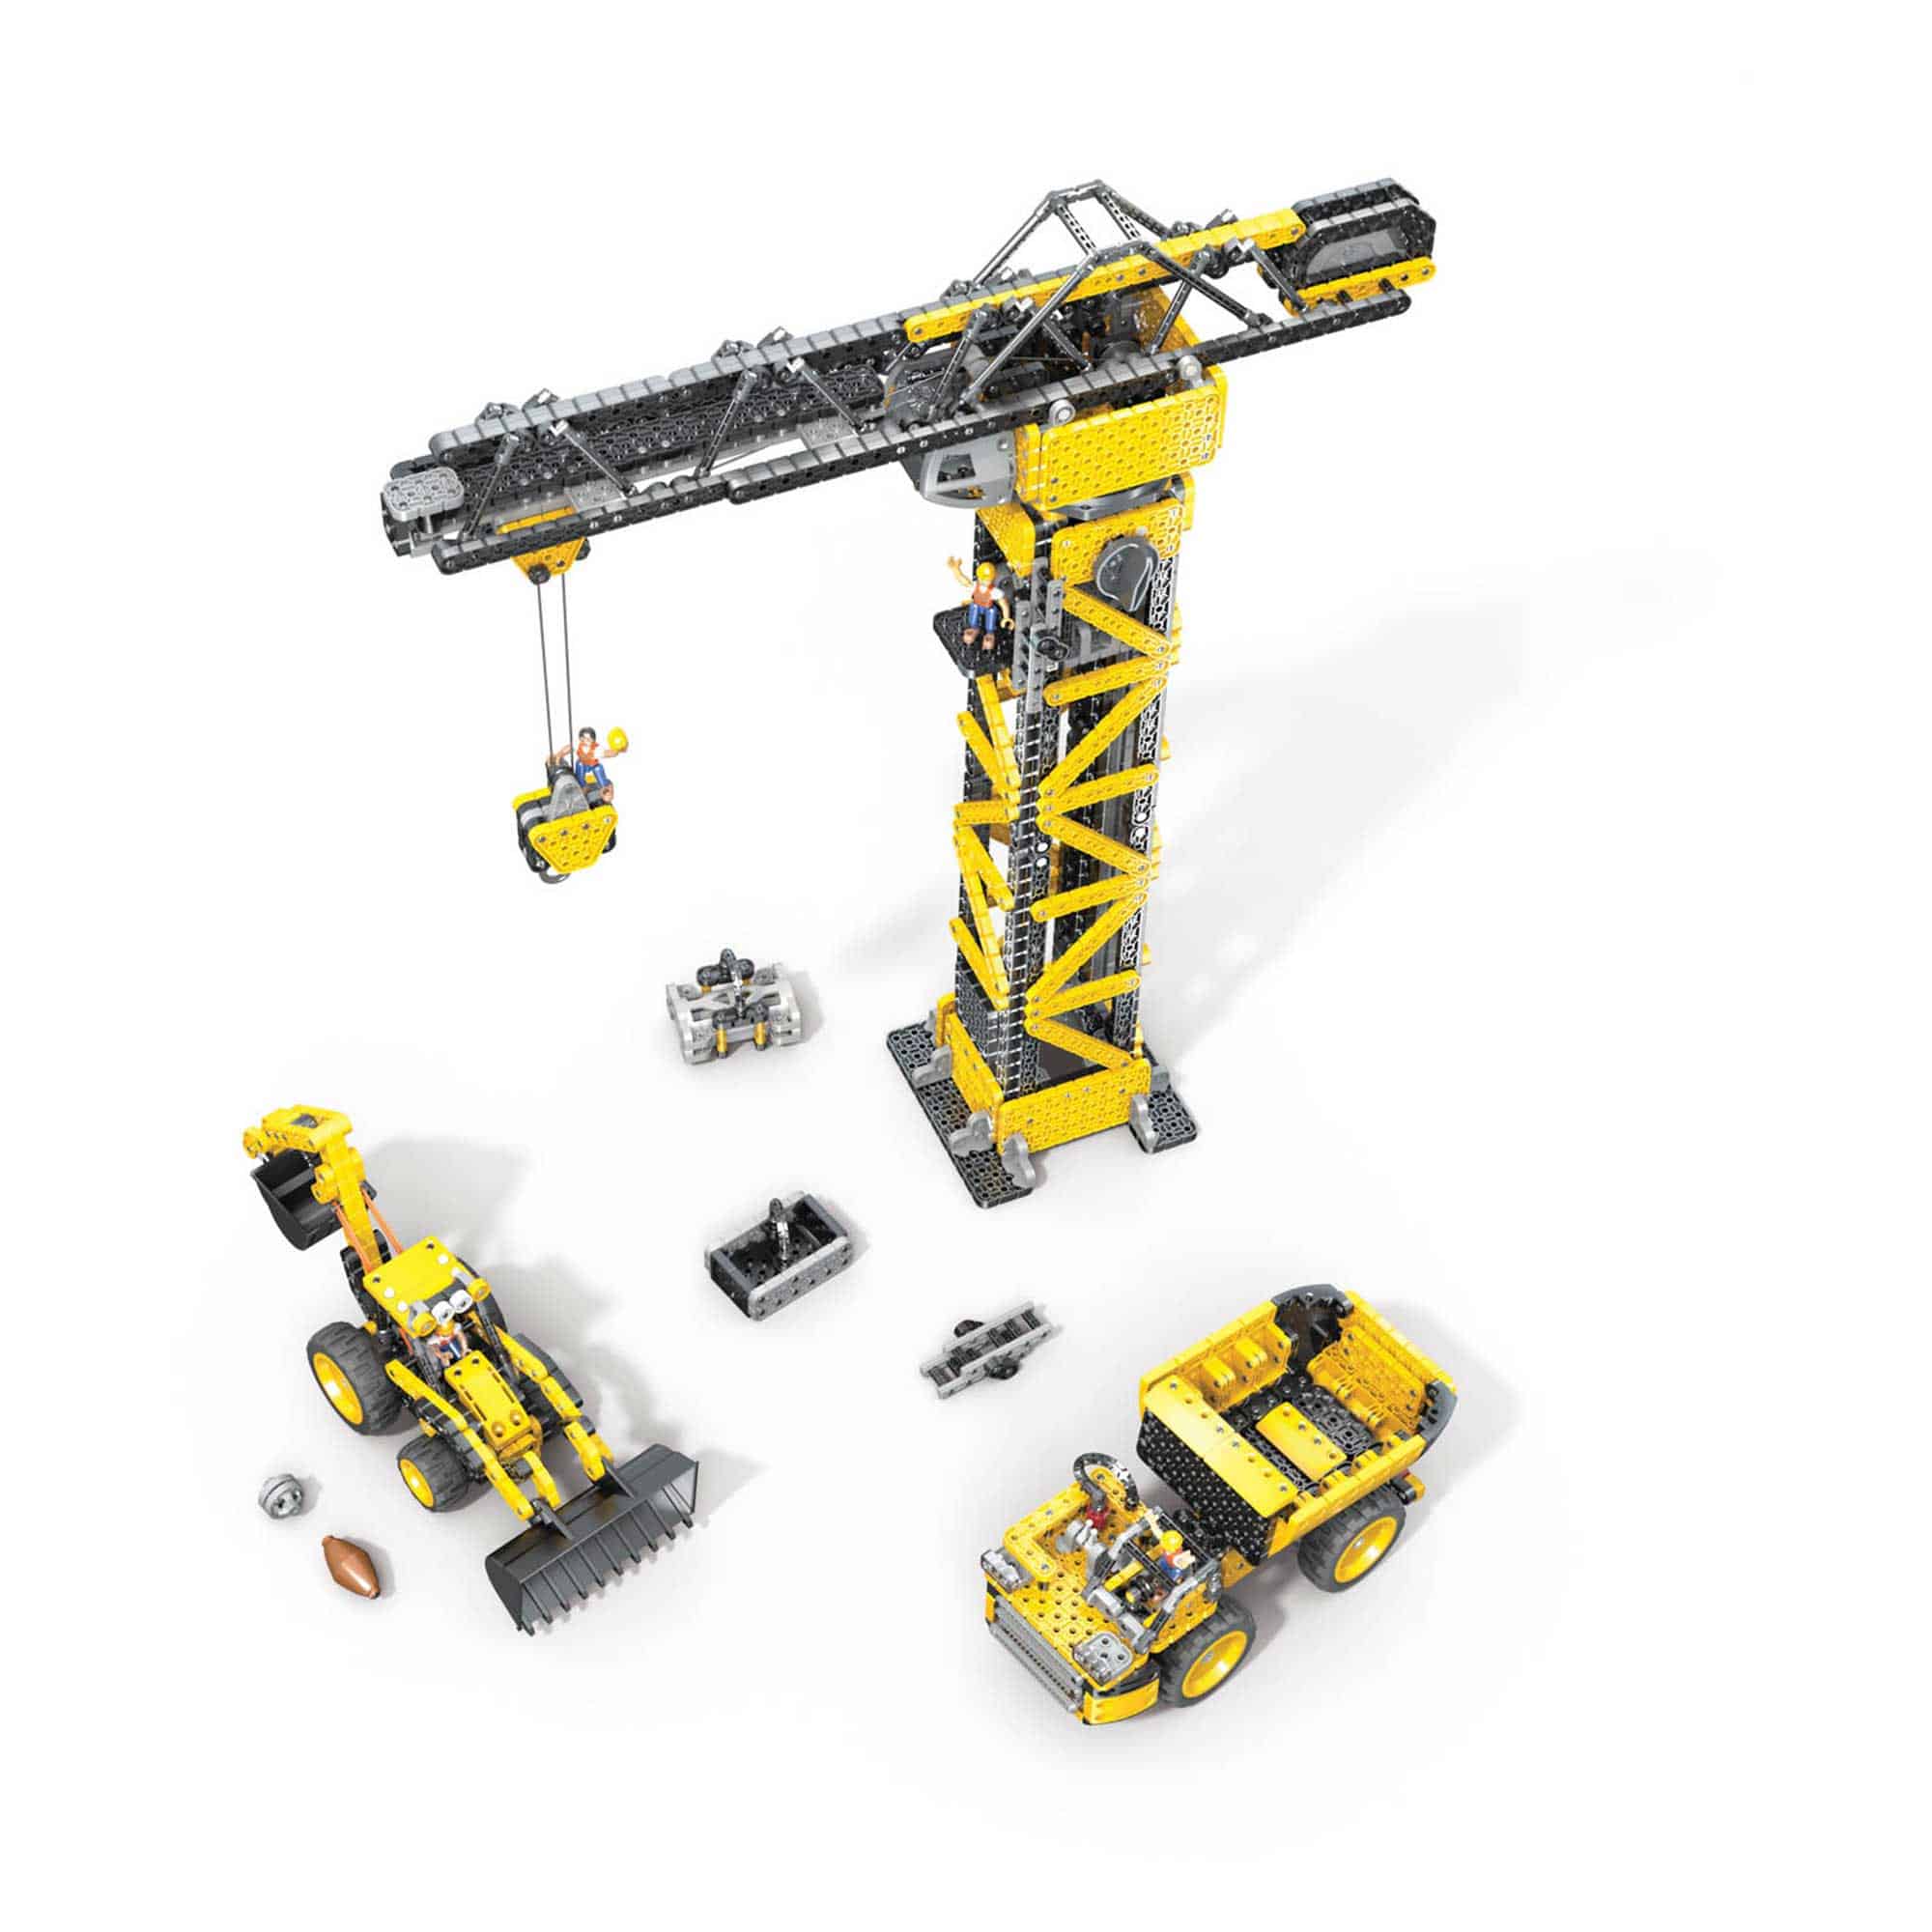 HEXBUG - VEX Robotics Construction Zone Construction Kit